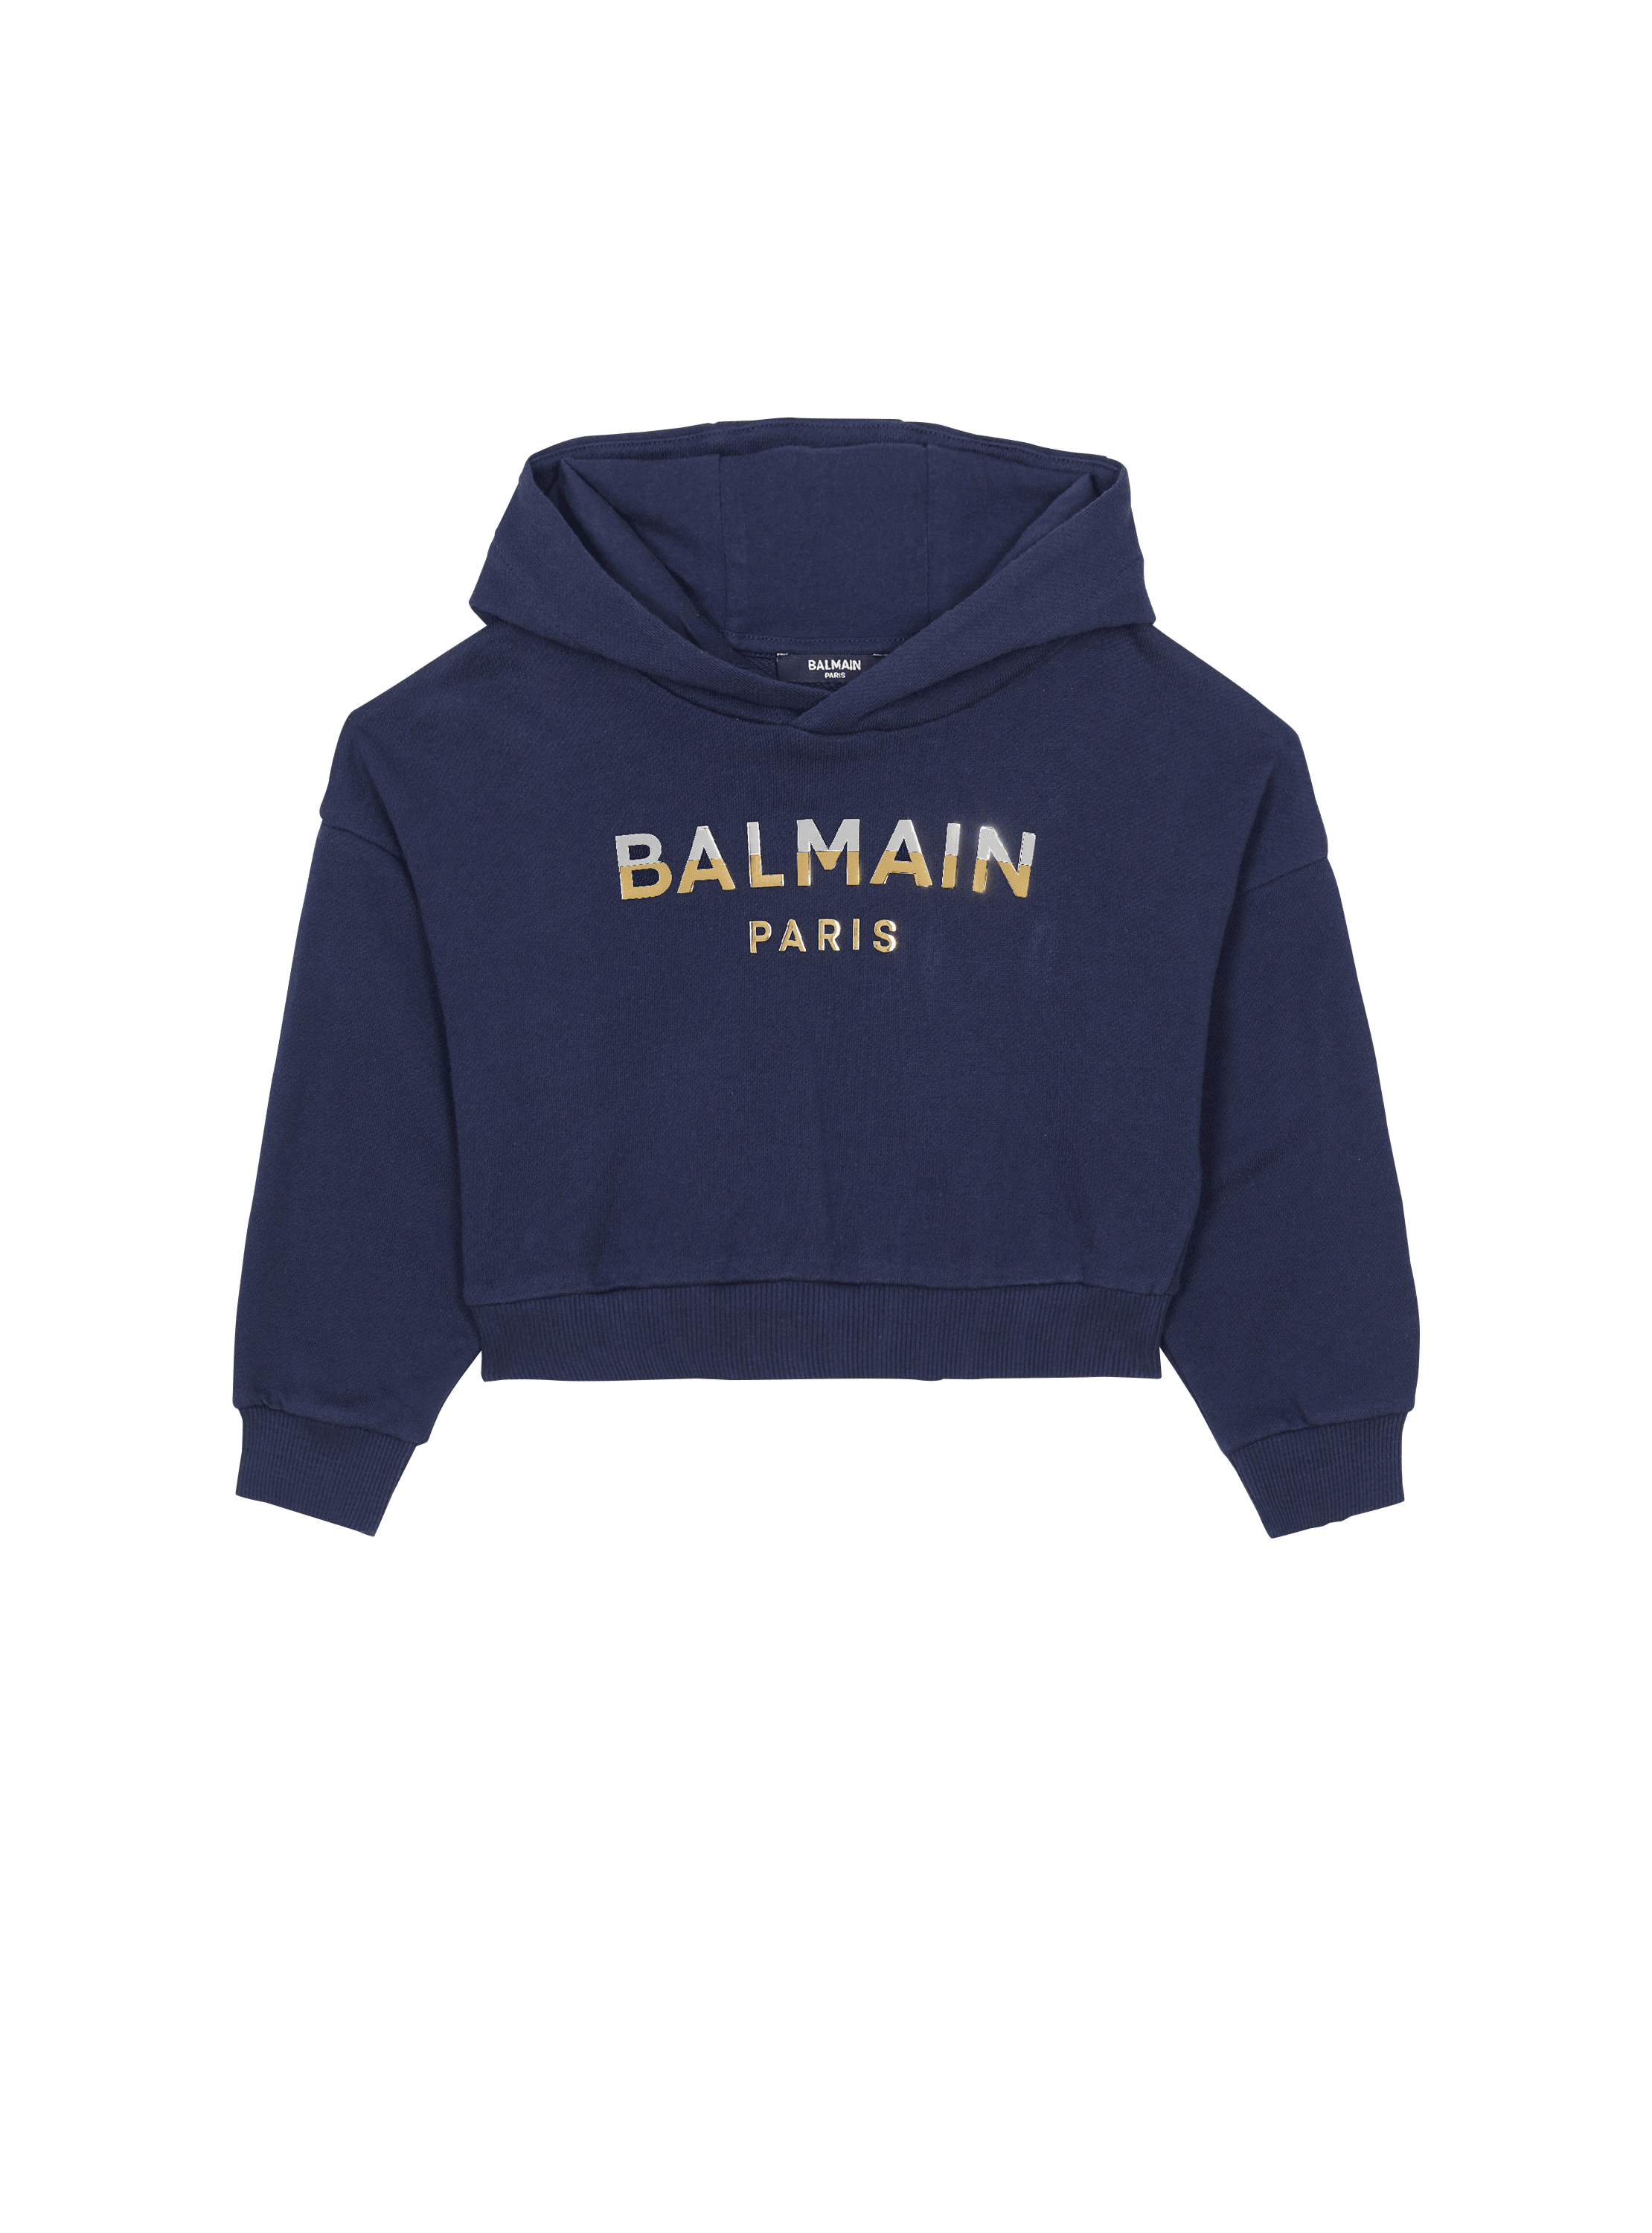 Balmain Paris hoodie - Child | BALMAIN